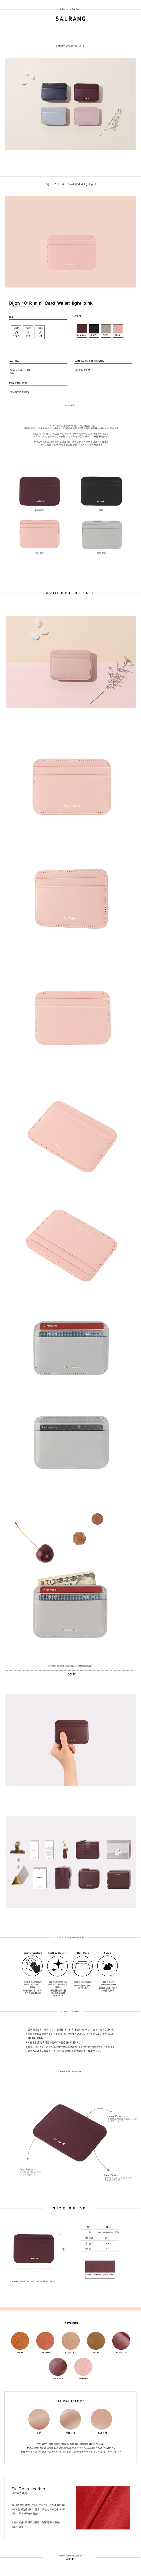 Dijon 101R mini Card Wallet light pink 25,000원 - 살랑 패션잡화, 지갑, 여성카드지갑, 합성피혁 바보사랑 Dijon 101R mini Card Wallet light pink 25,000원 - 살랑 패션잡화, 지갑, 여성카드지갑, 합성피혁 바보사랑